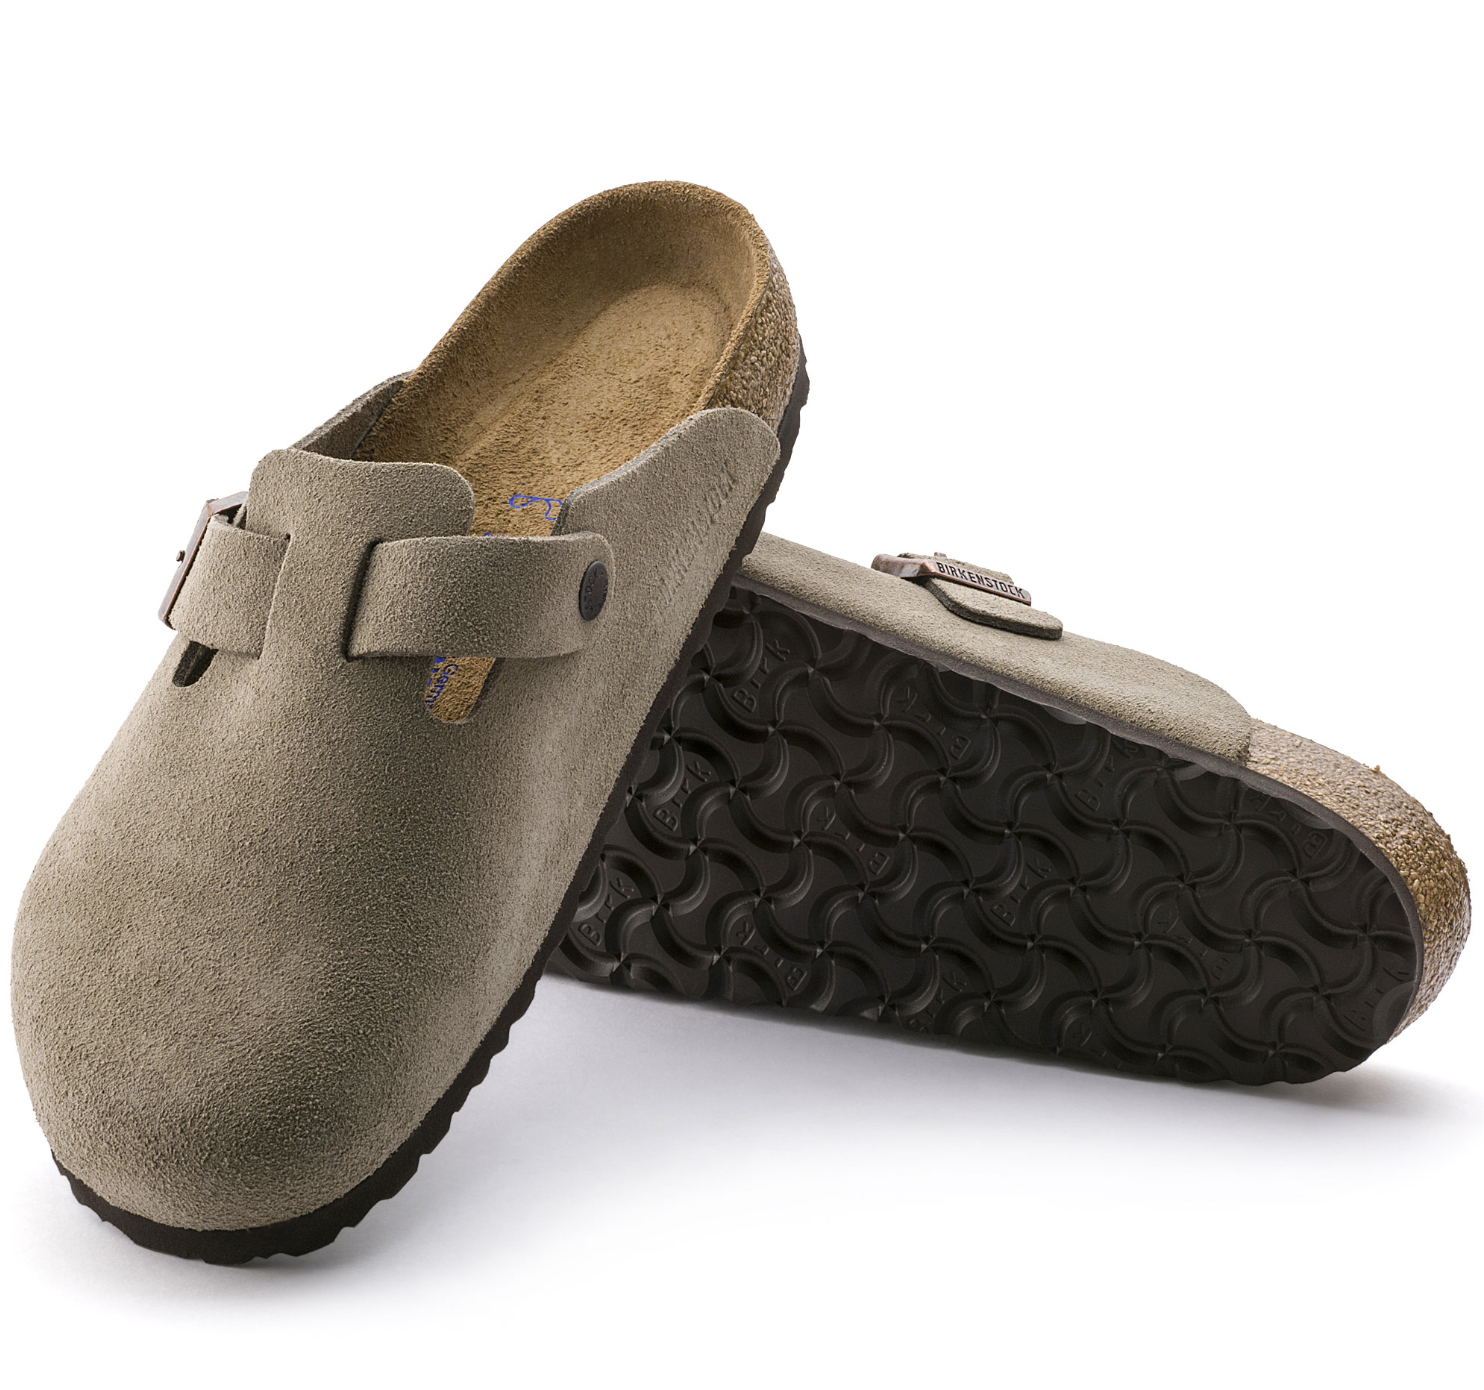 The gray Birkenstock shoes